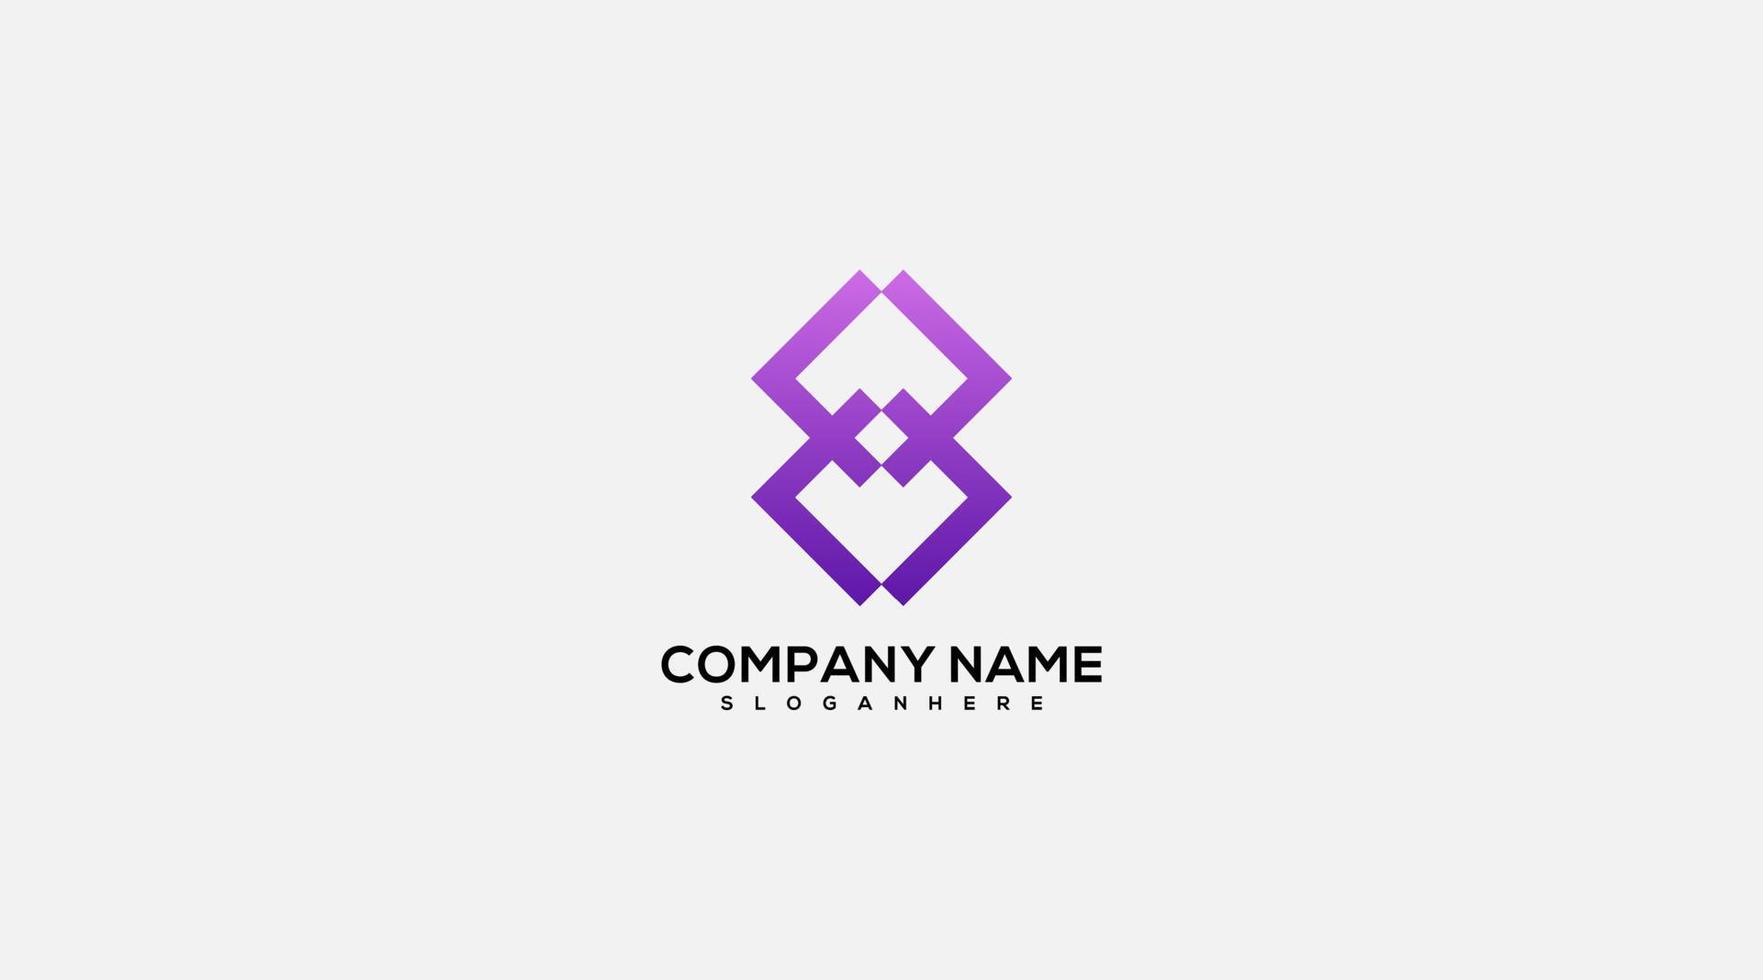 icon logo company name design illustration vector